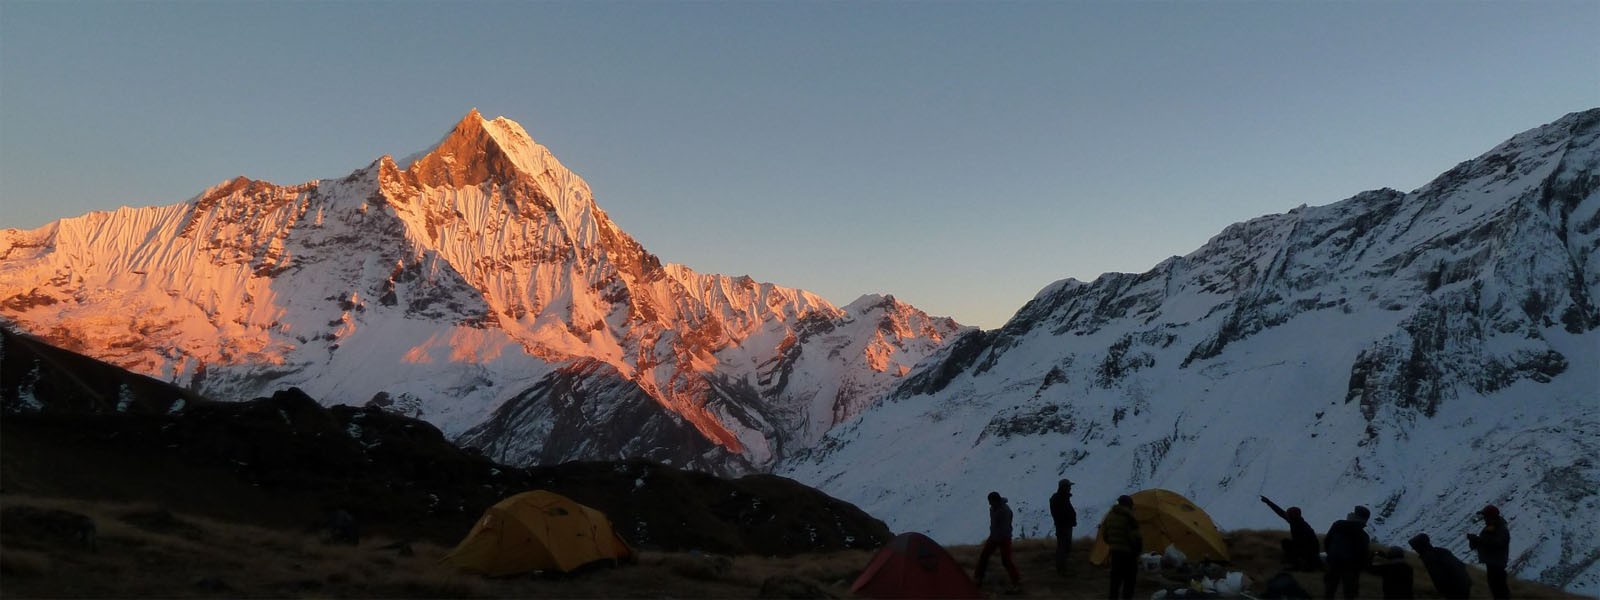 Tent Peak High Camp